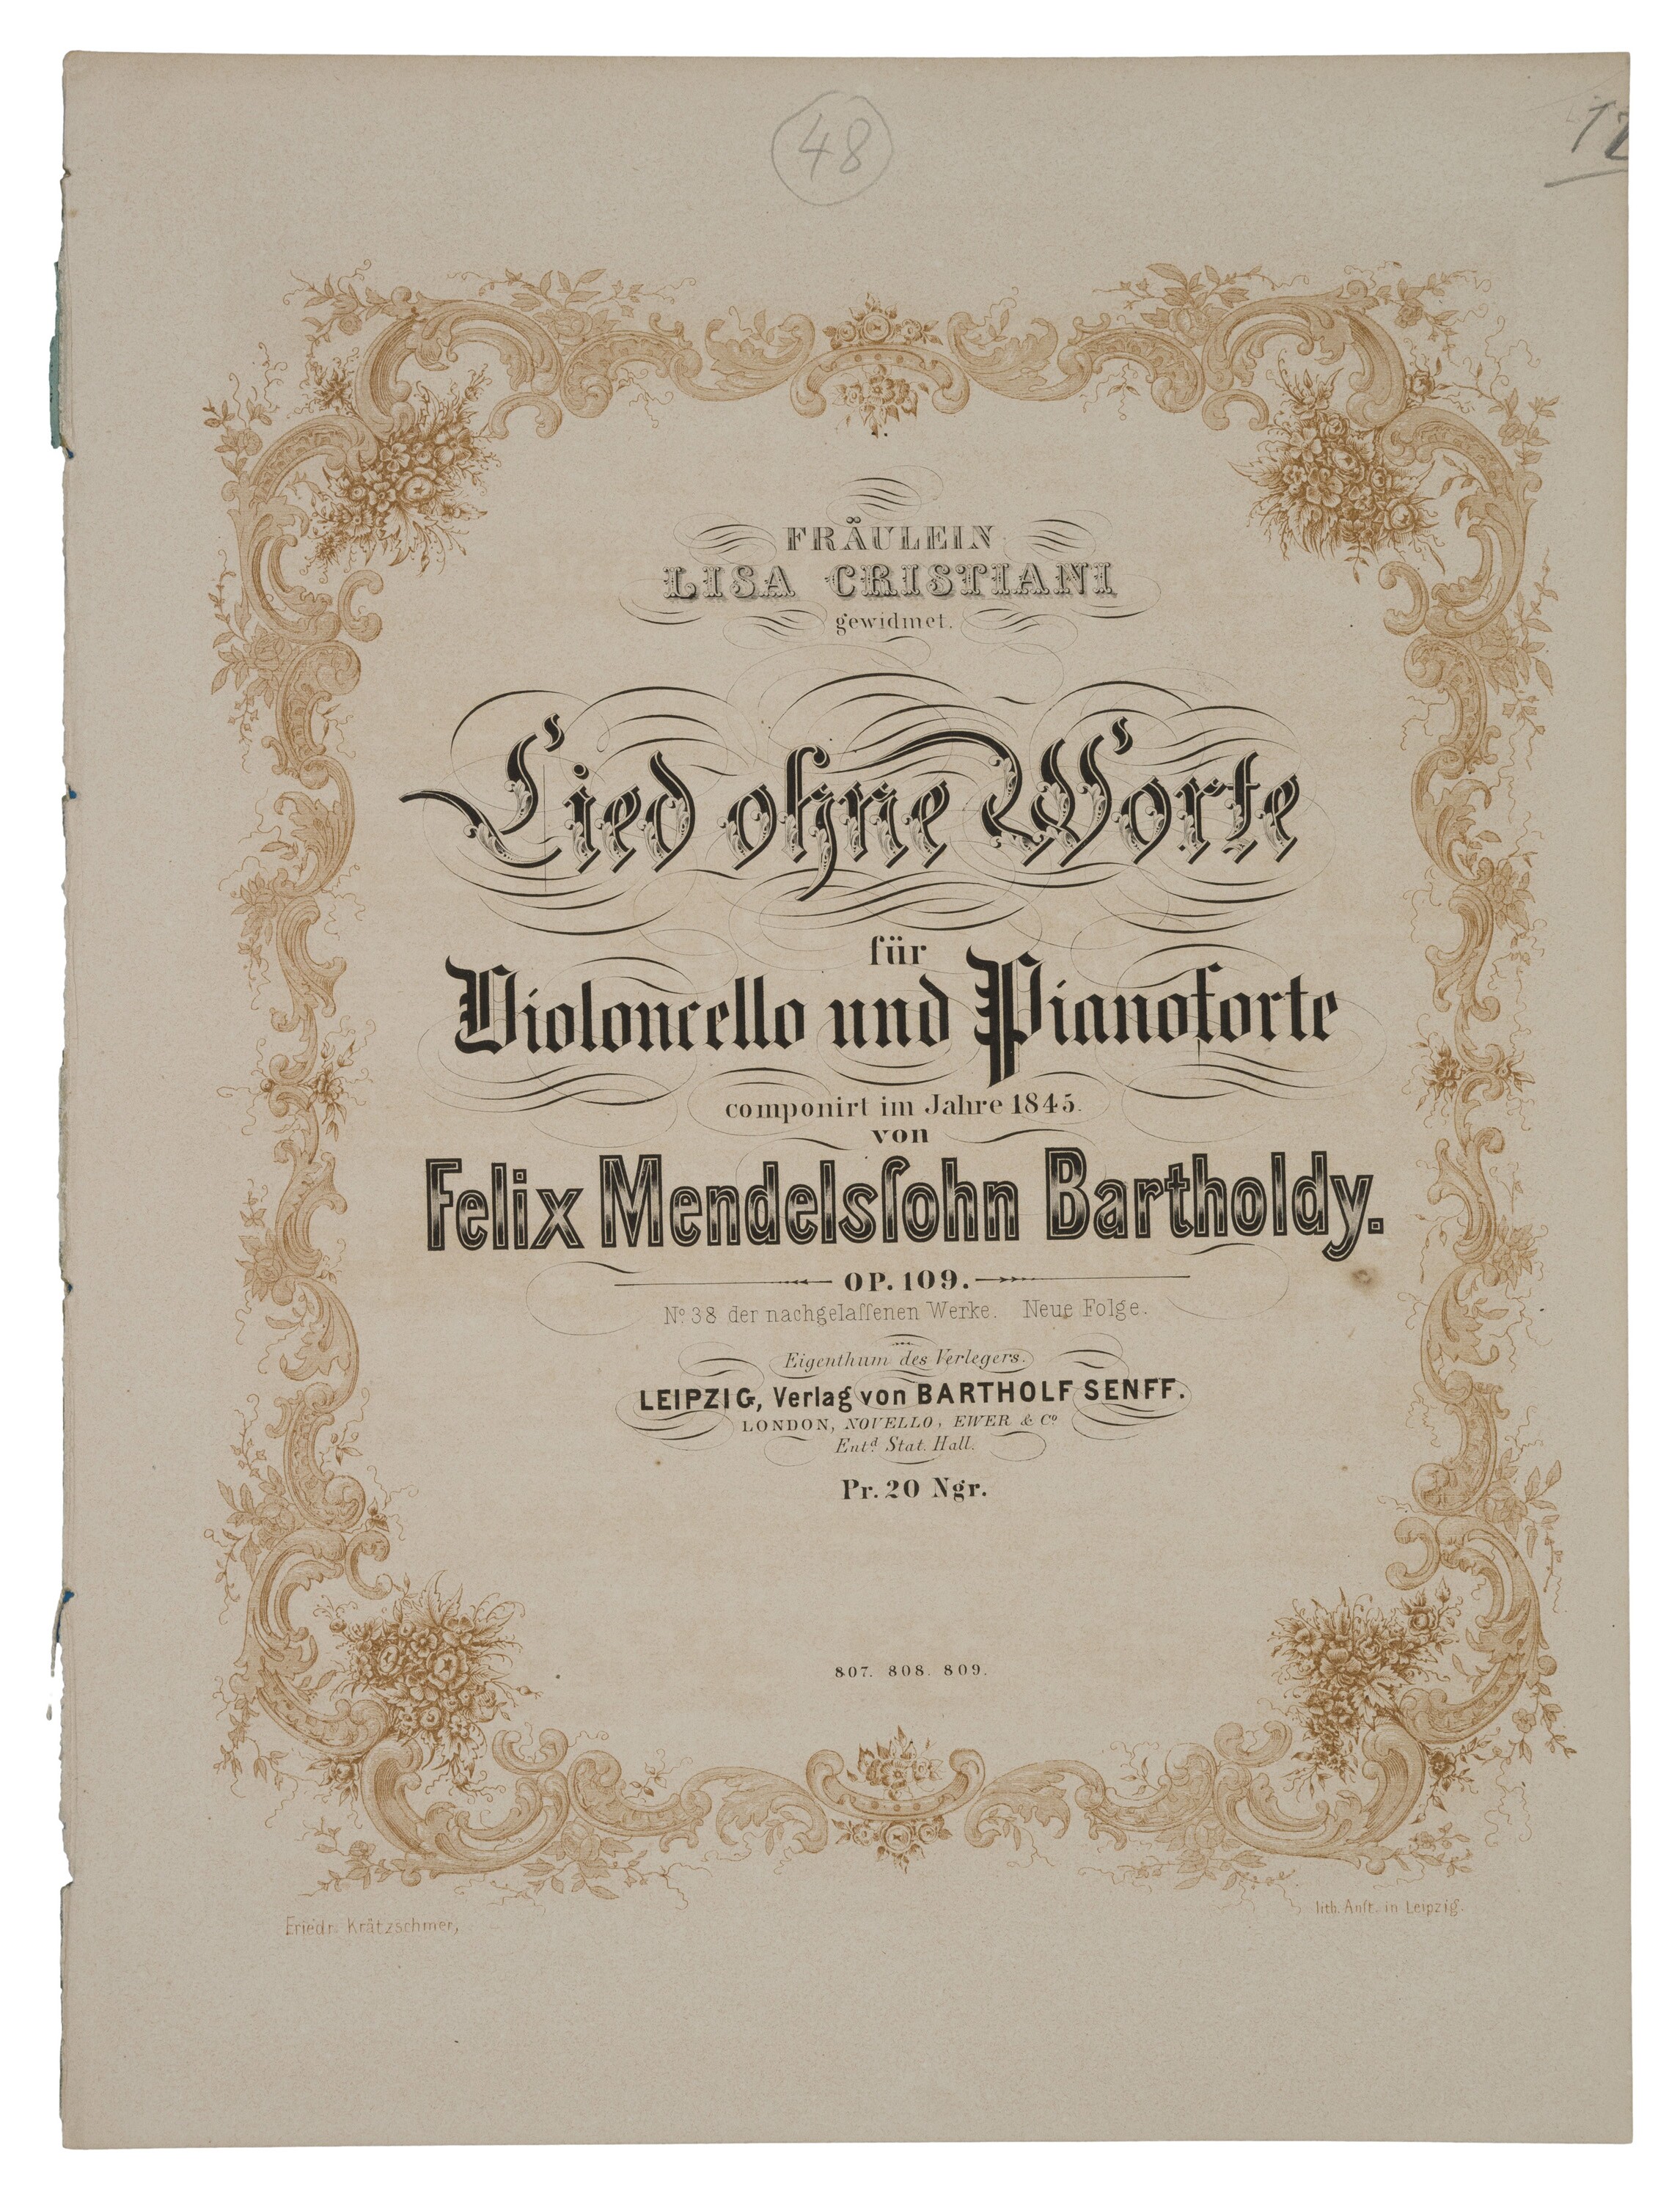 Felix Mendelssohn Bartholdy, Romance sans paroles D-Dur (Felix-Mendelssohn-Bartholdy-Stiftung RR-F)